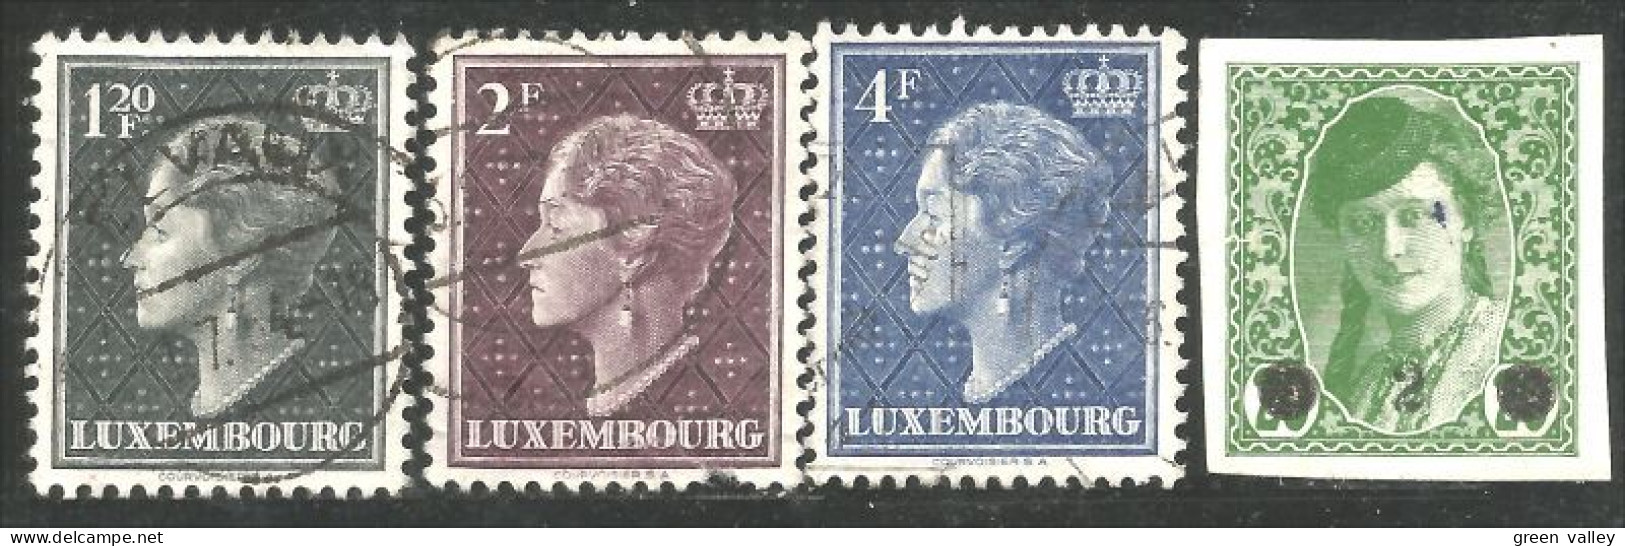 584 Luxembourg 1948 Grande Duchesse Charlotte 1F 20 - 4F (LUX-123) - 1948-58 Charlotte Linkerkant